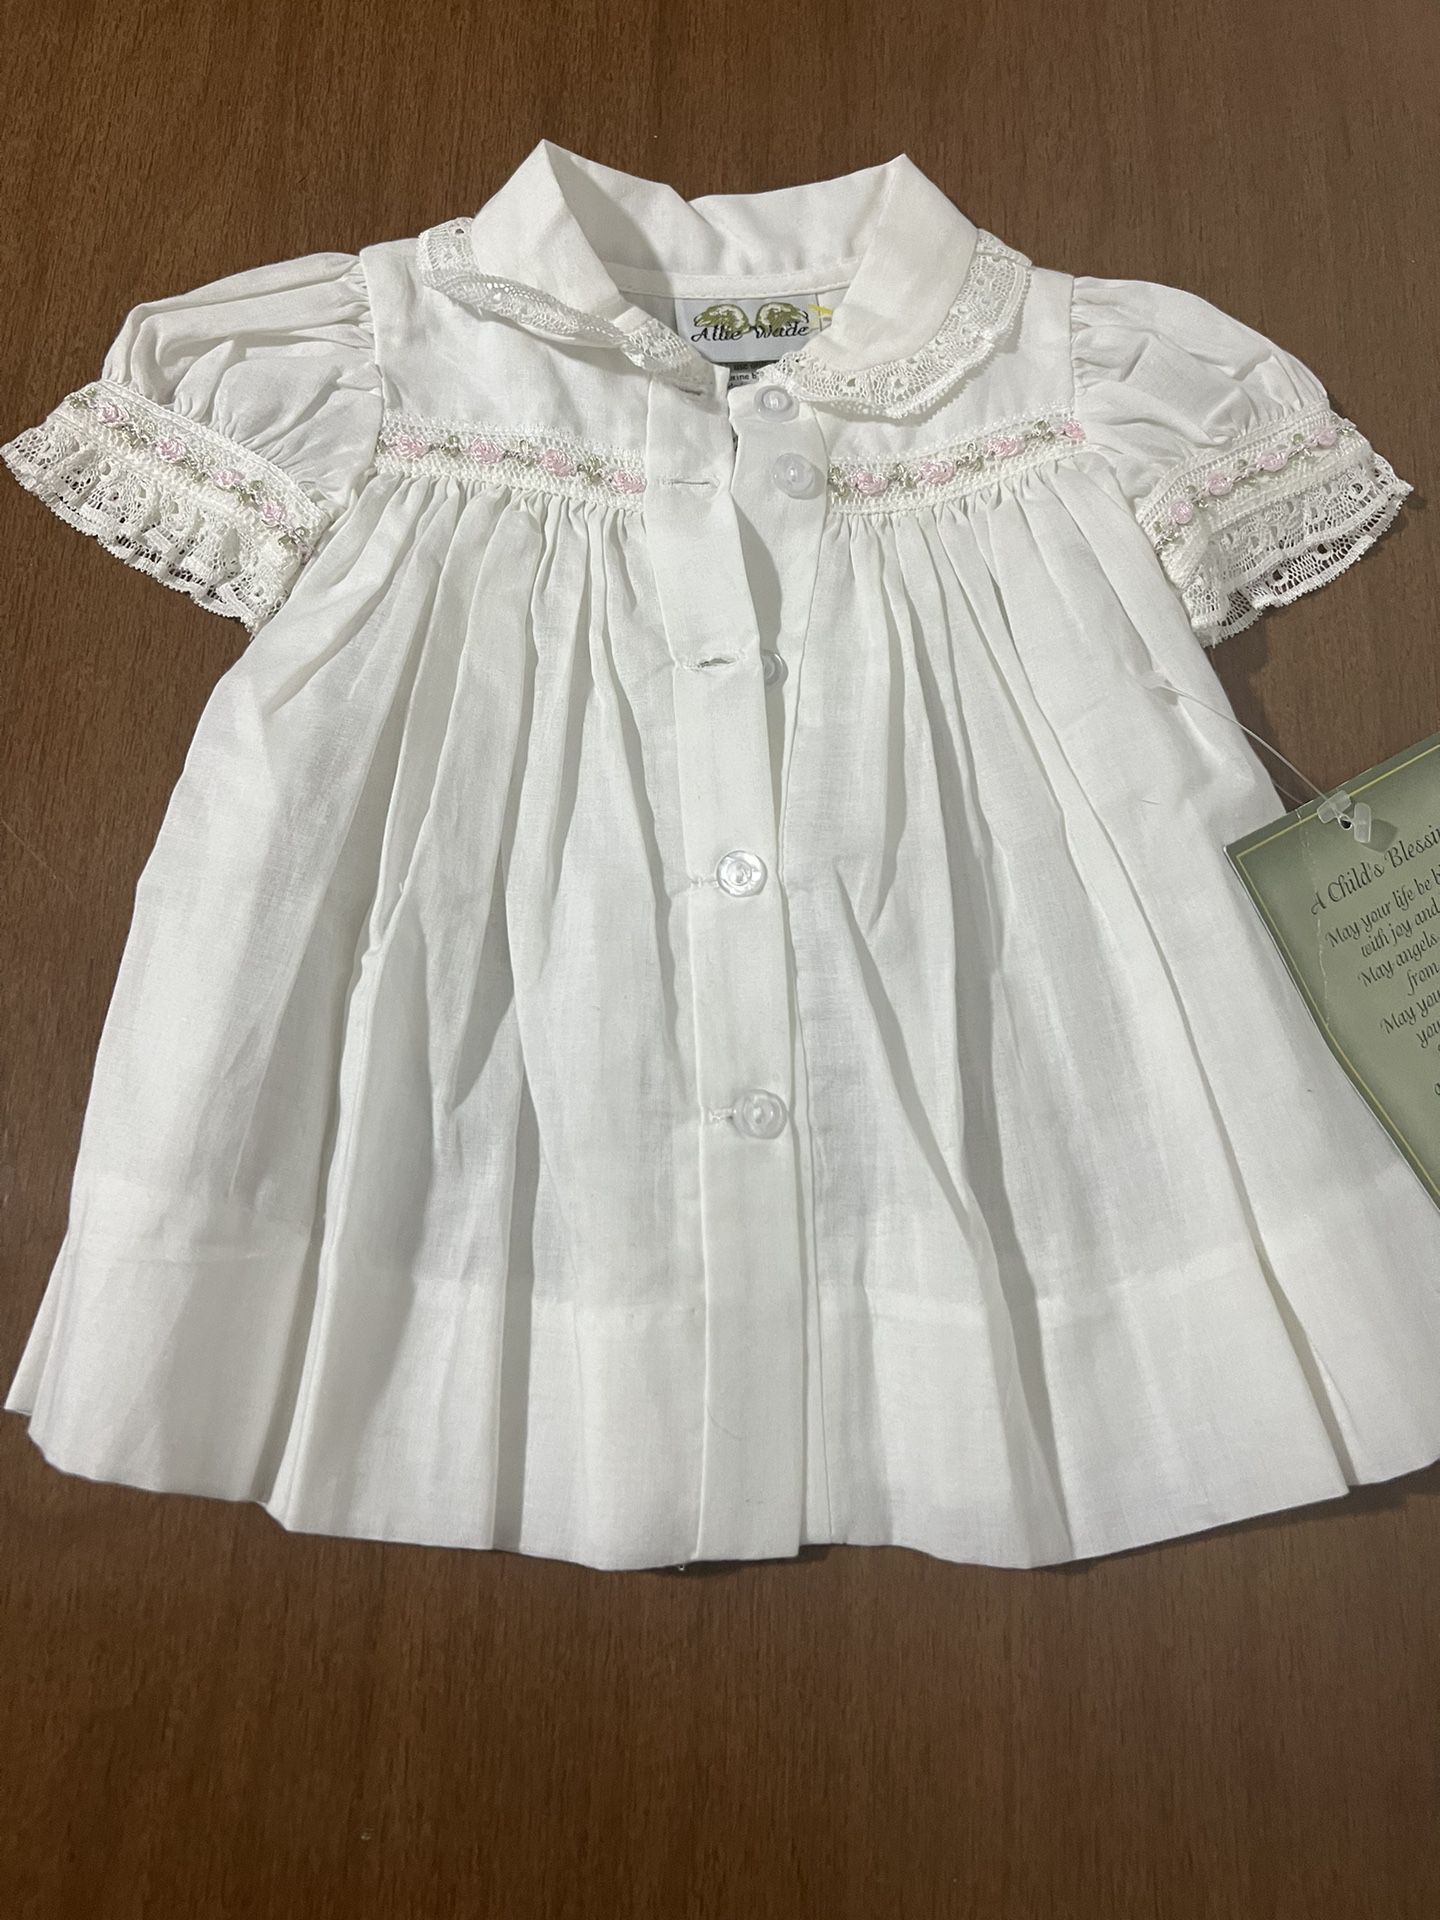 Baby dress  Allie Wade size 3 months  100% Cotton